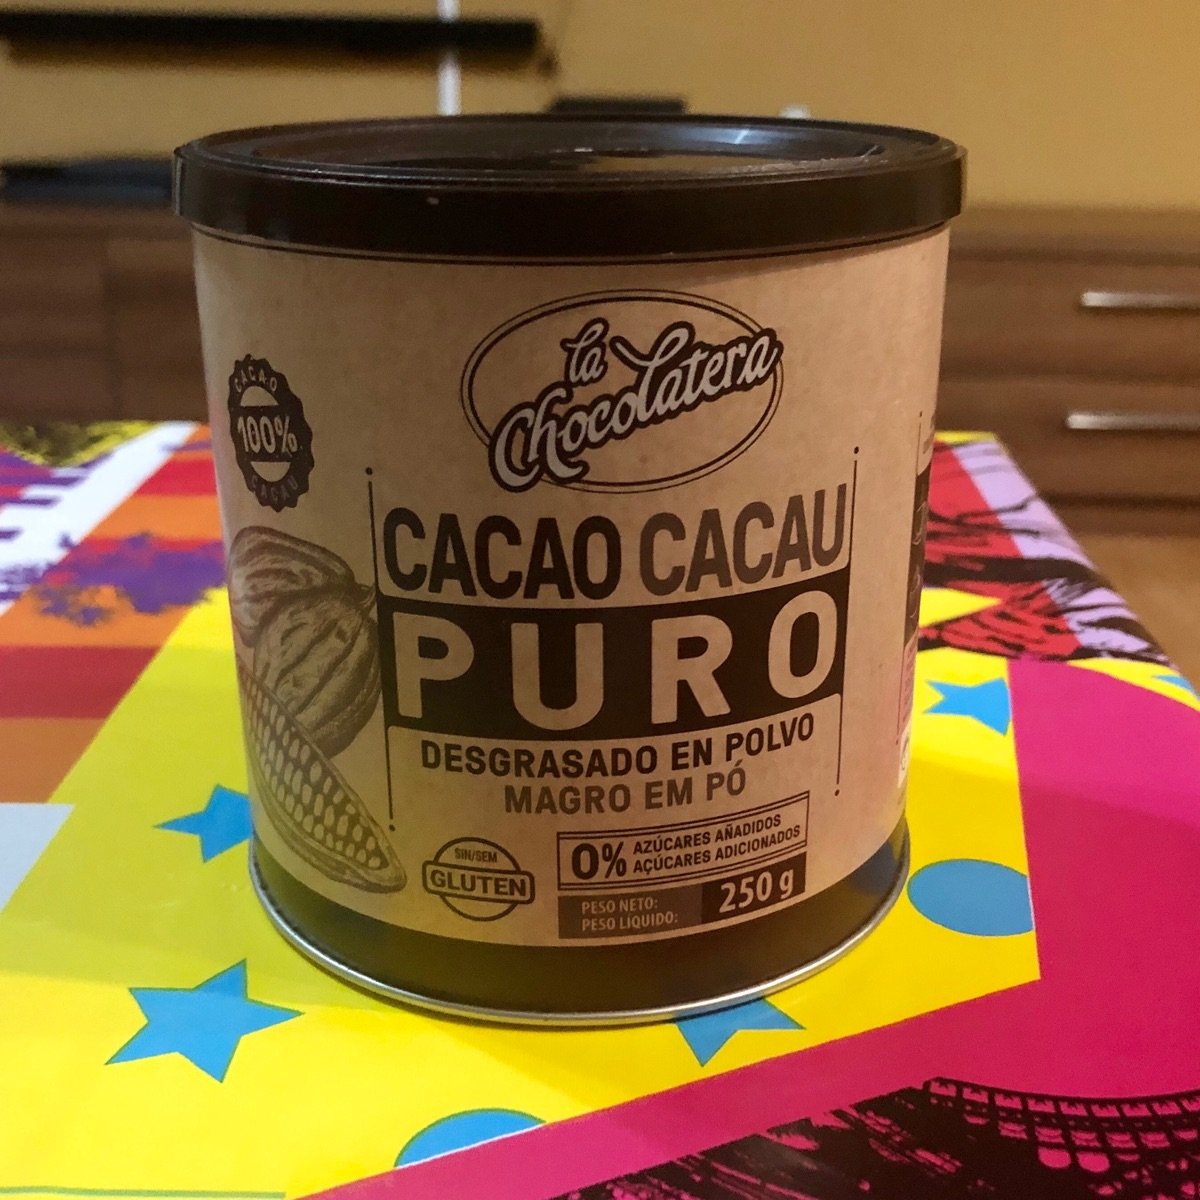 Cacao Puro